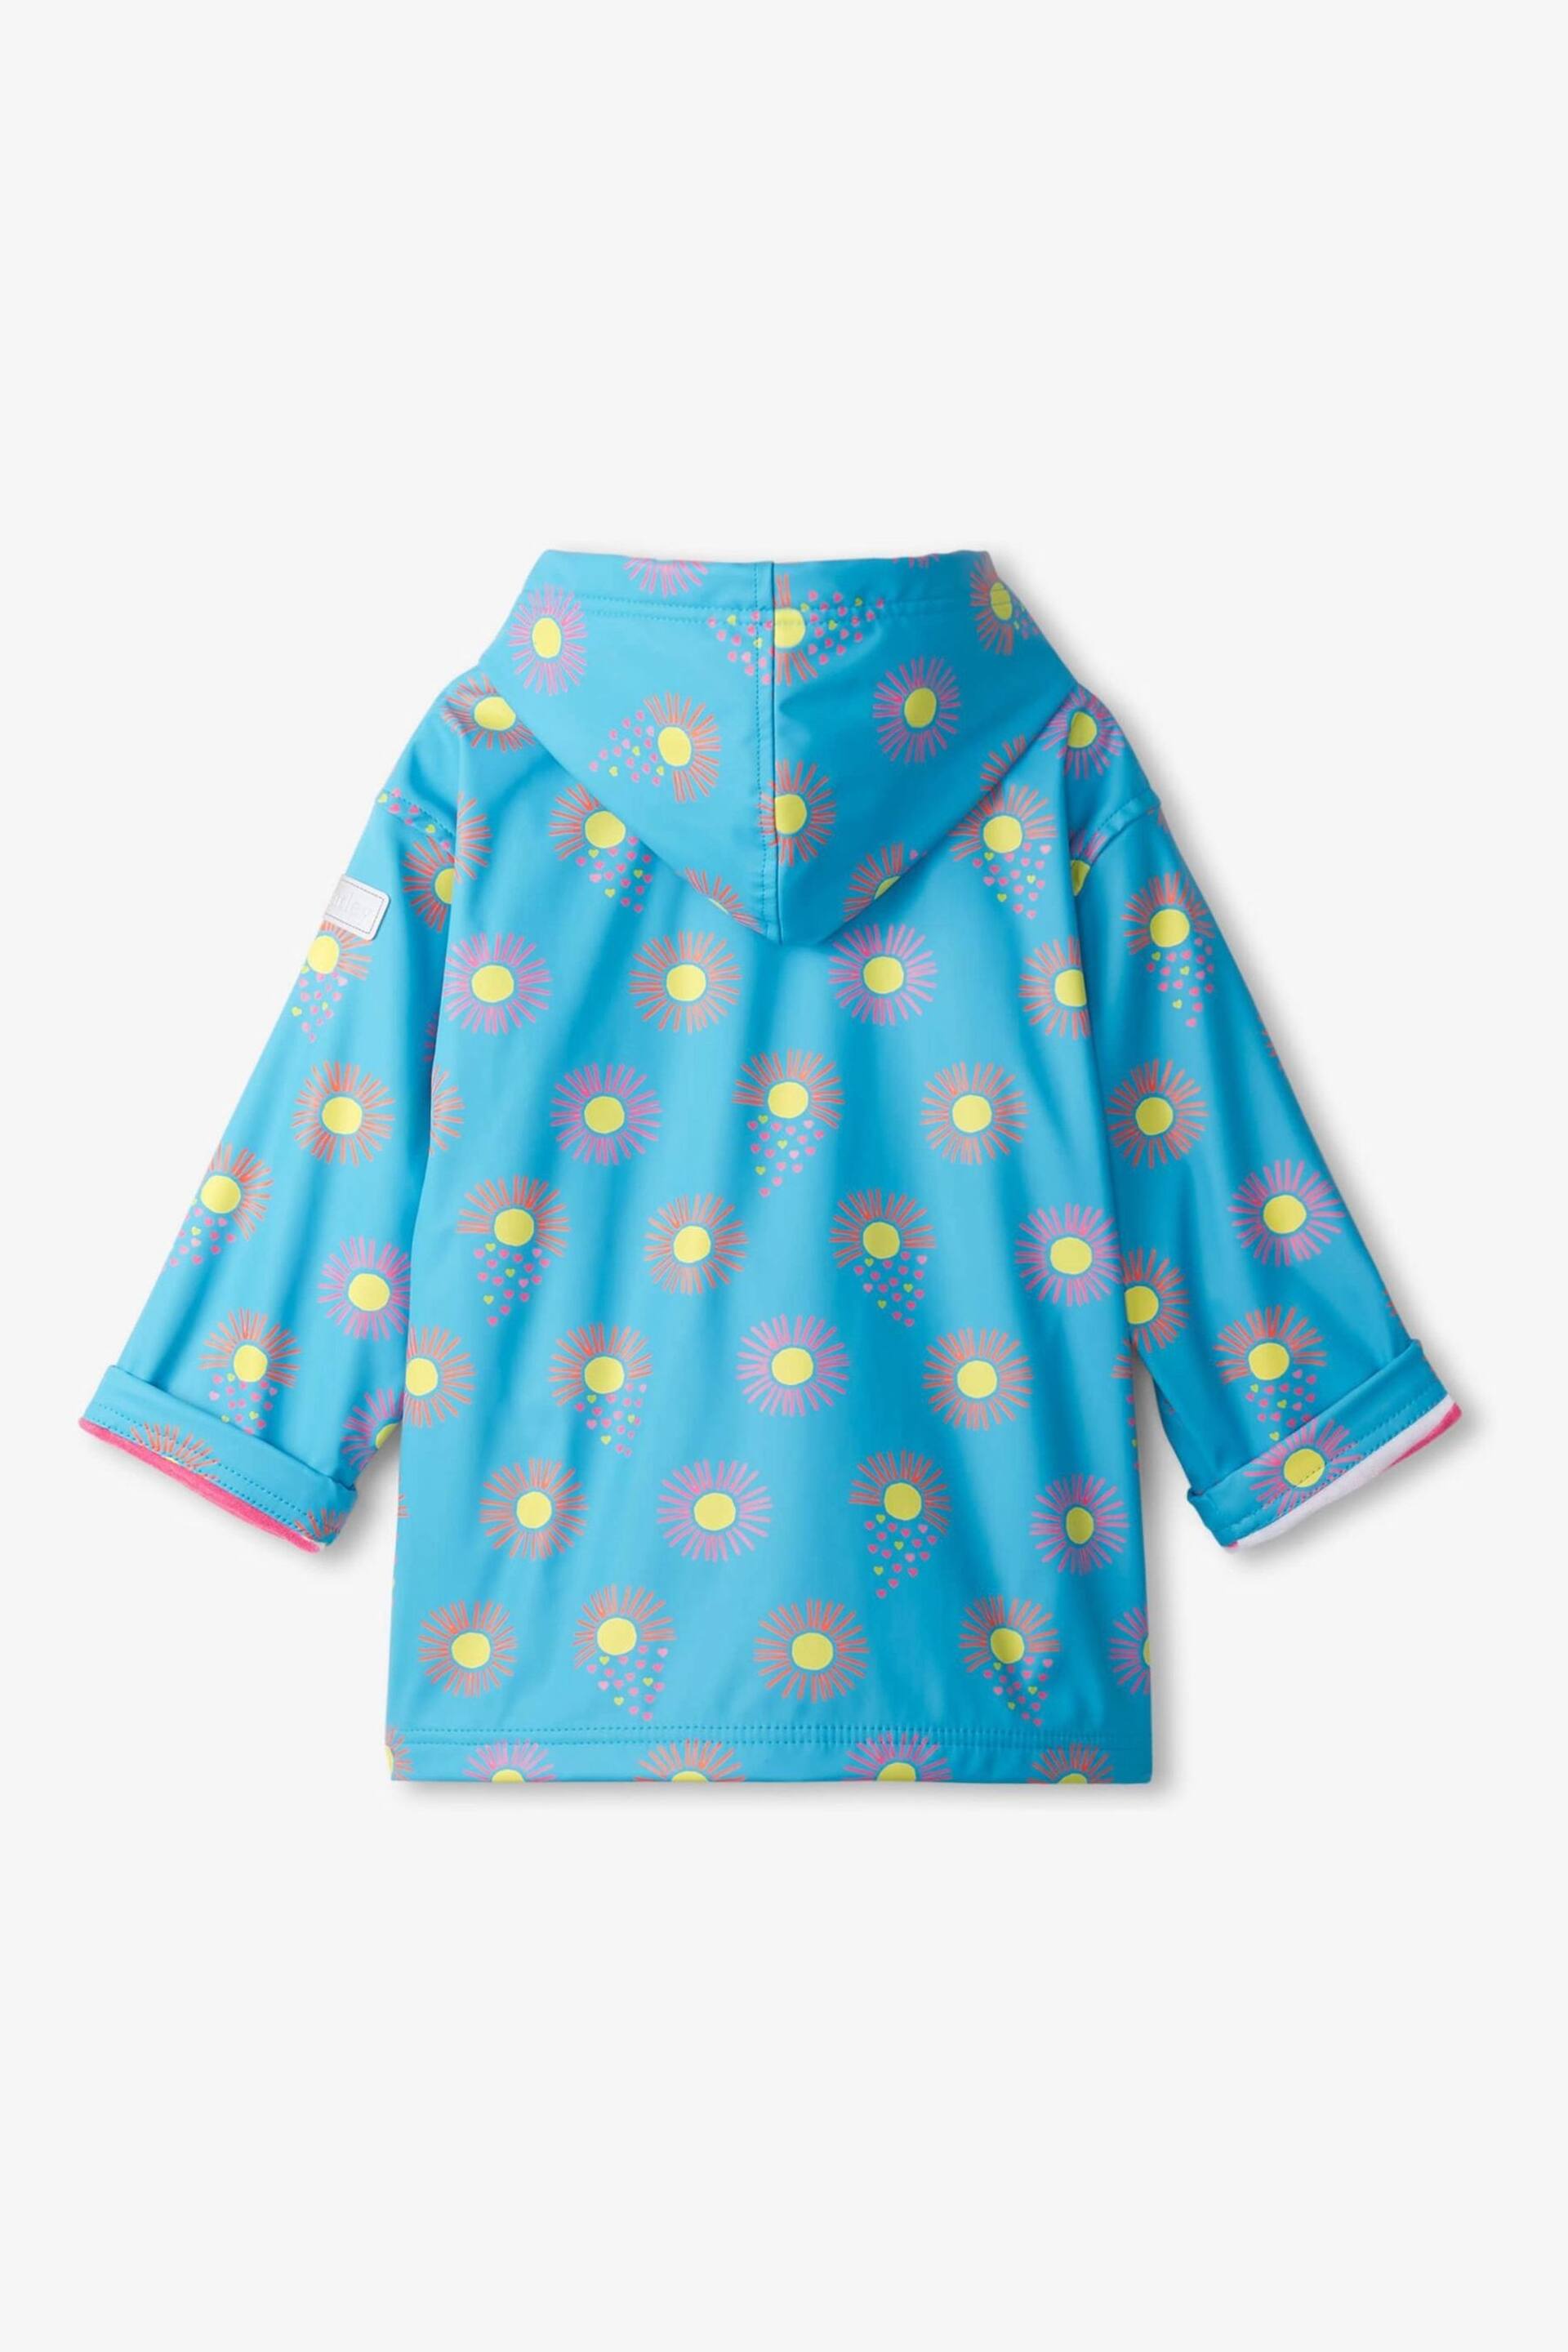 Hatley Waterproof Summer Zip up Hooded Rain Jacket - Image 2 of 5